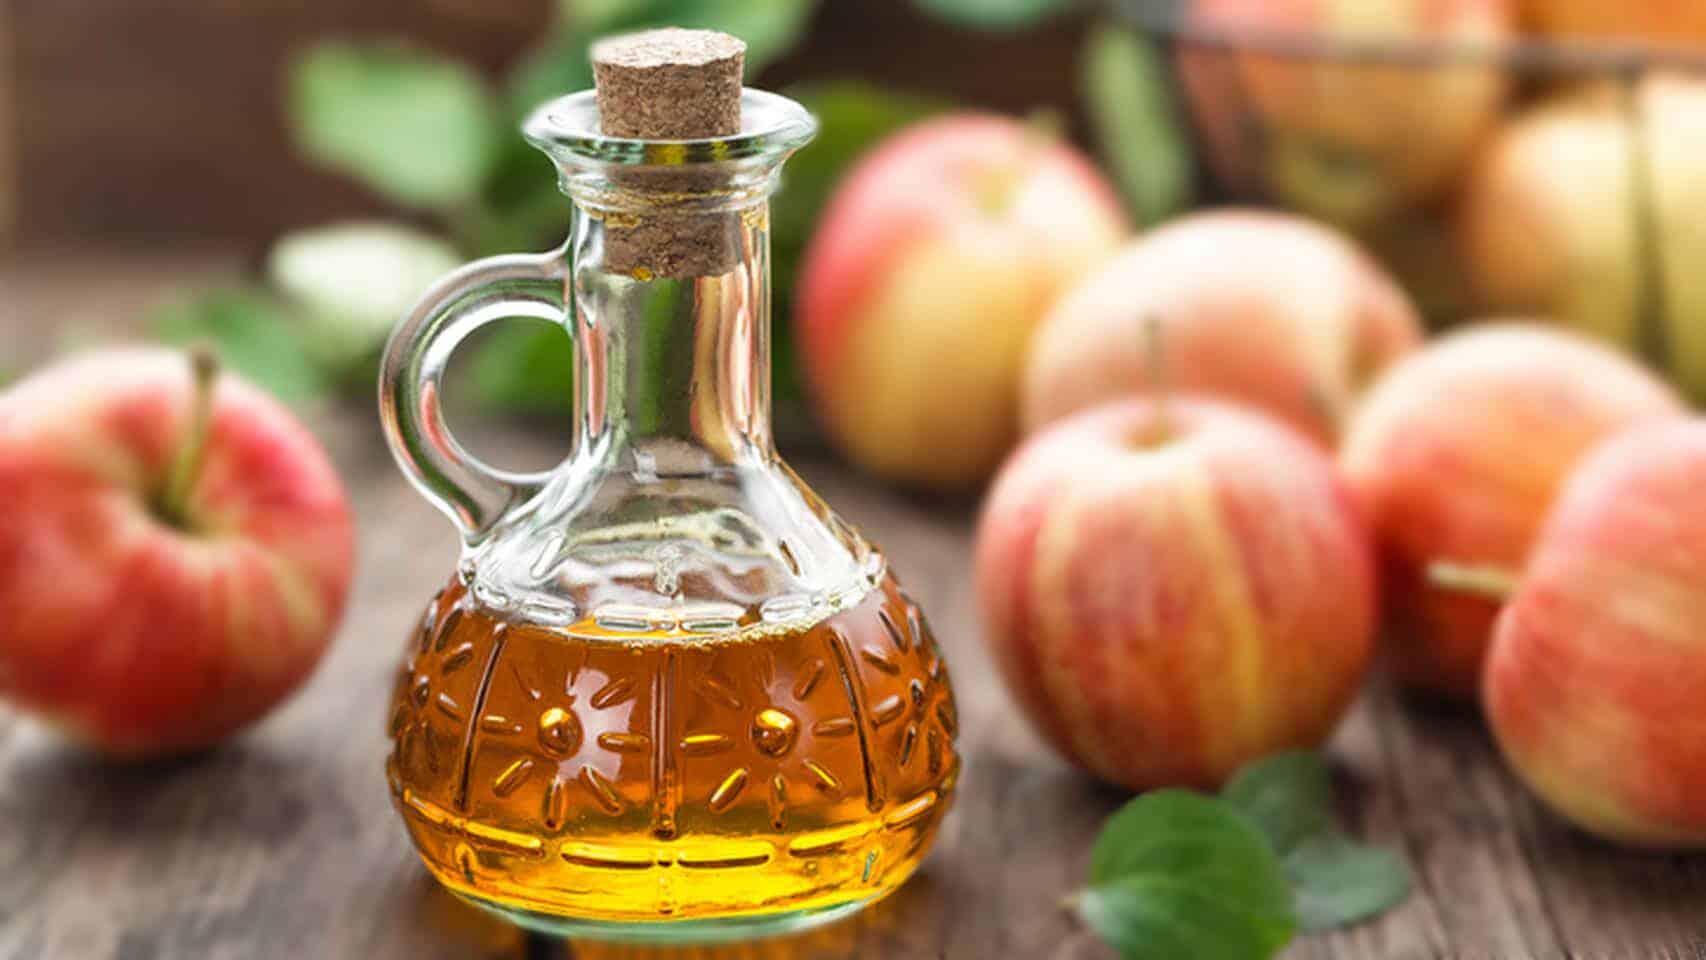 Vinagre de maçã pode remover rugas profundas e manchas?